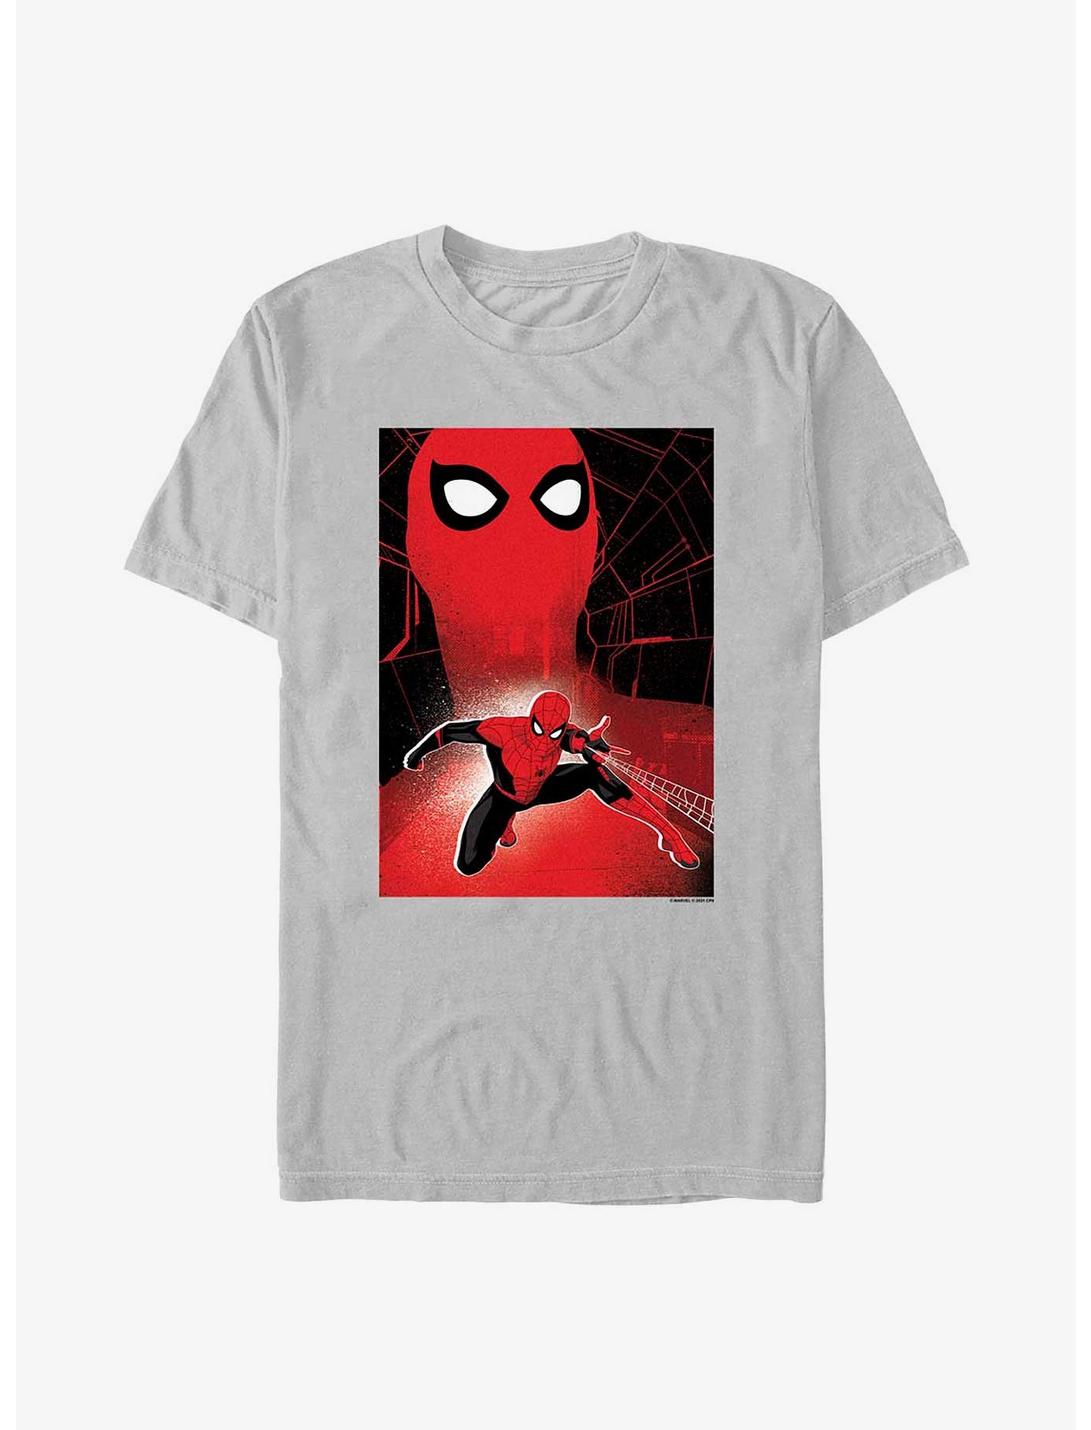 NWT Unisex Marvel Spiderman Pajamas Top and Bottom Grey 100% Cotton 3XL XXXL